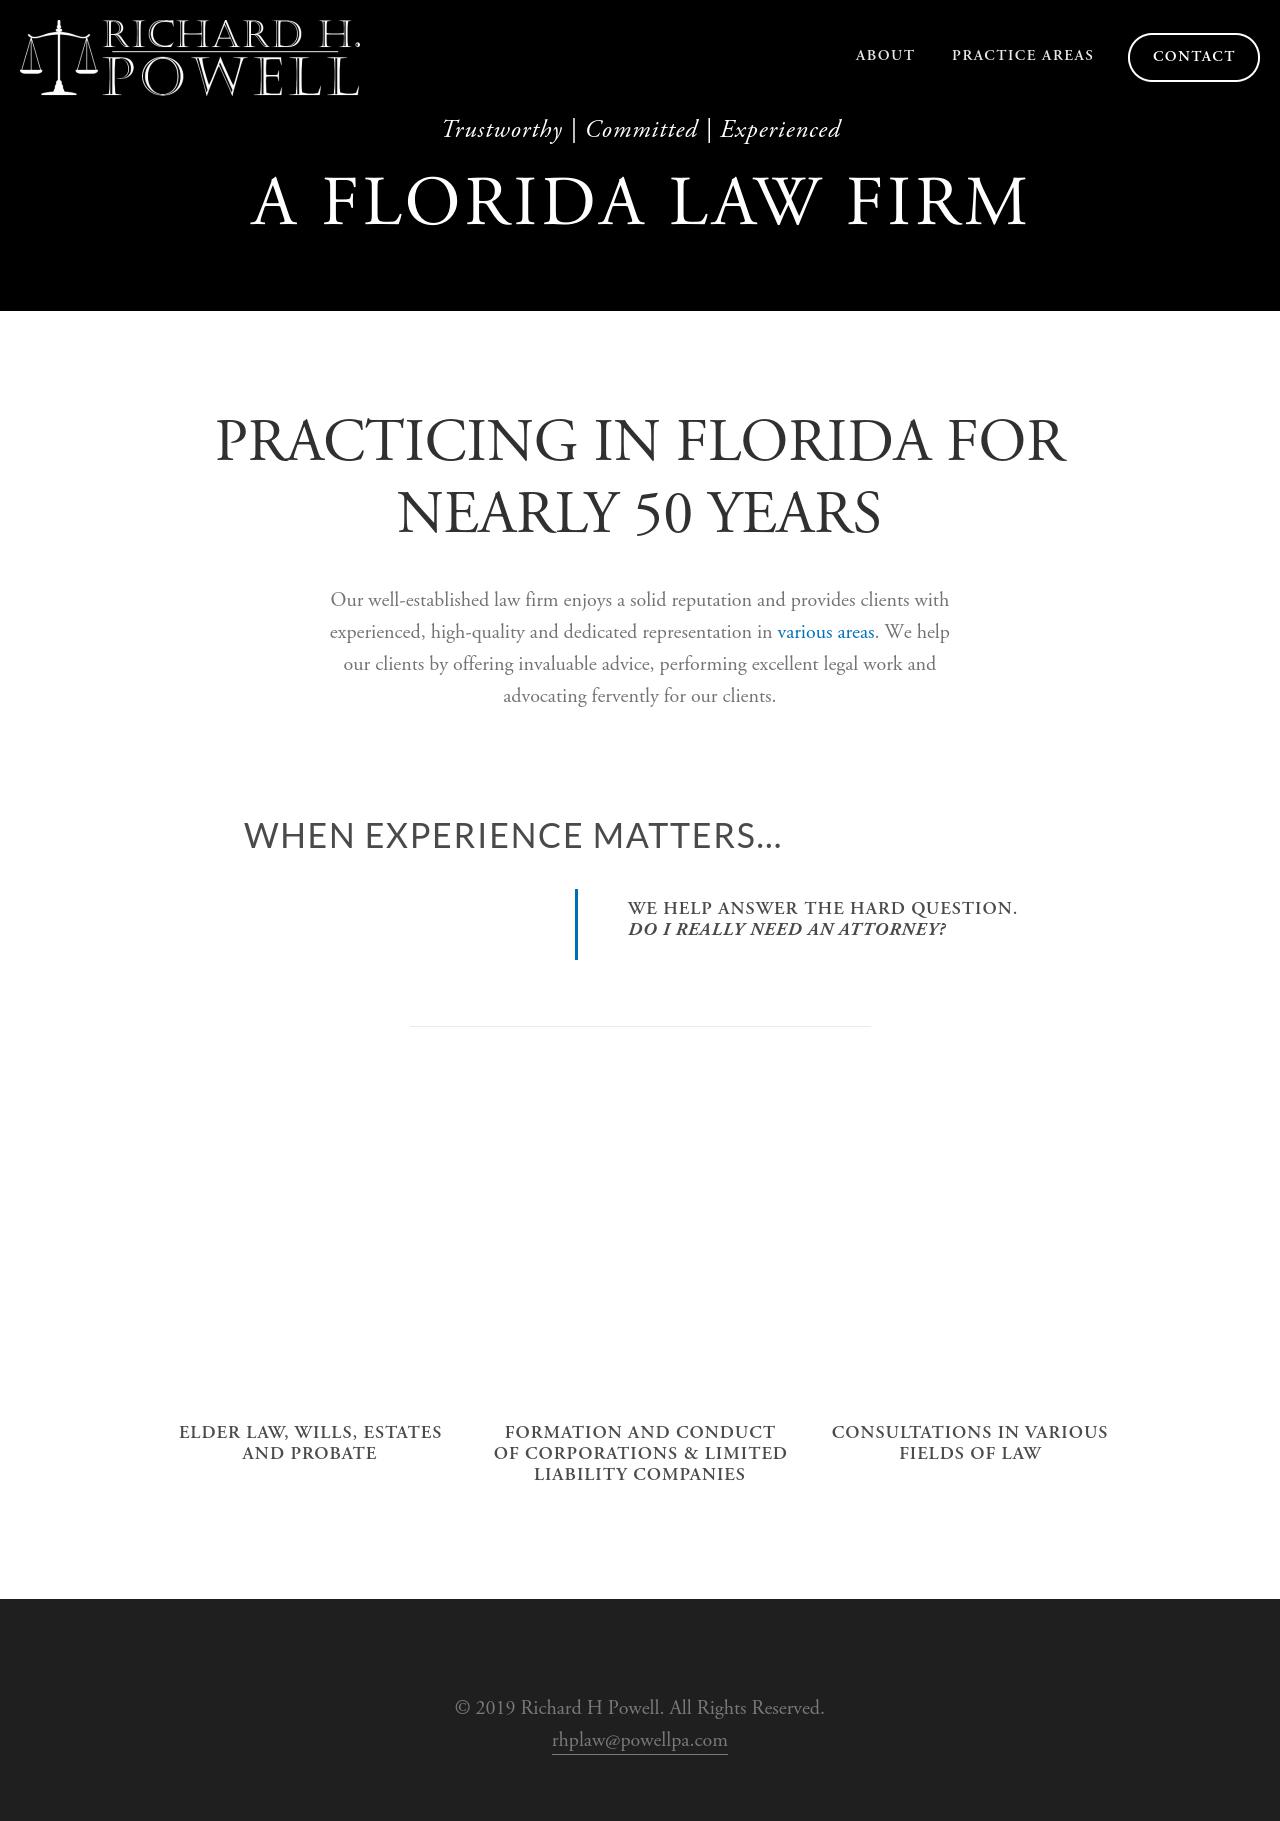 Richard H. Powell & Associates, P.A. - Fort Walton Beach FL Lawyers